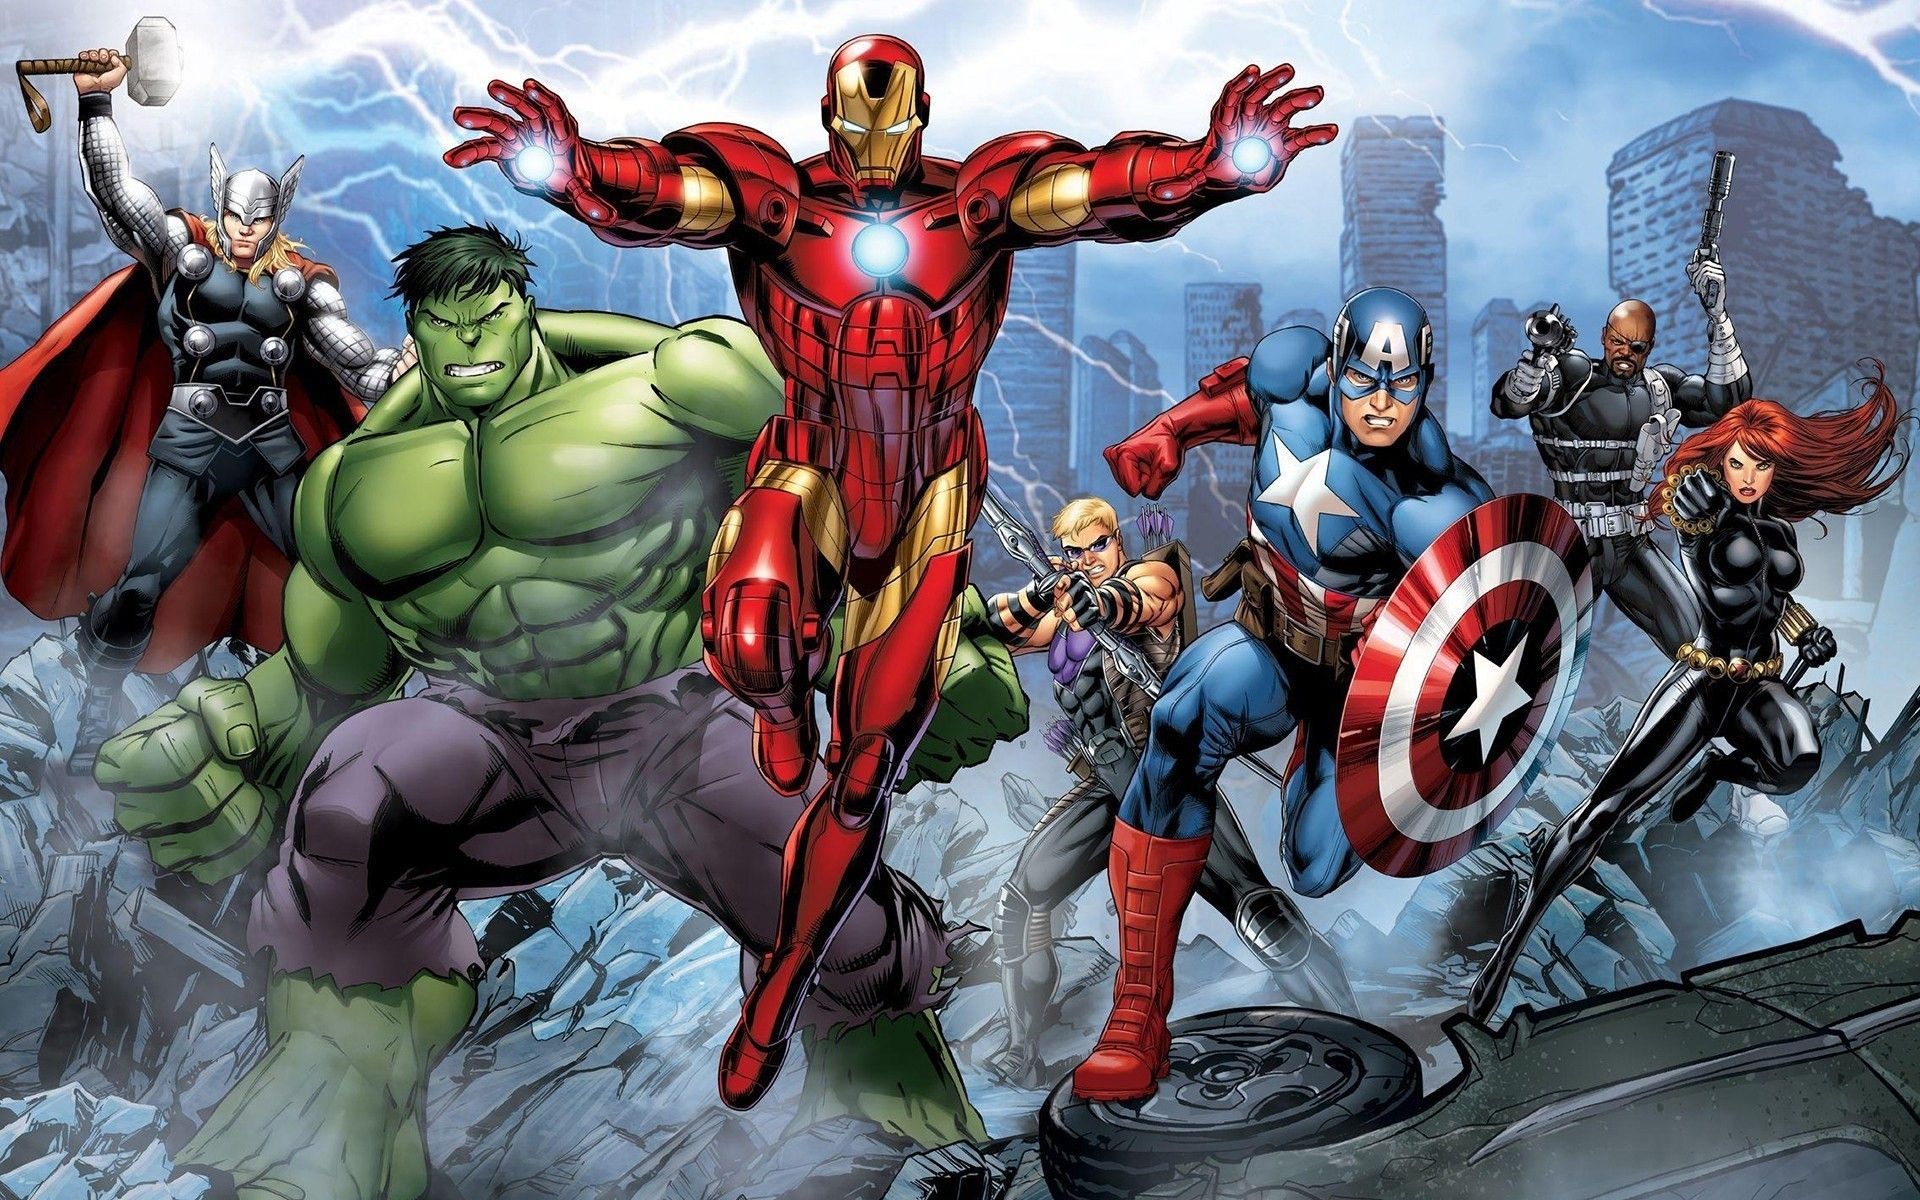 super hero. Cartoon wallpaper hd, Avengers cartoon, Avengers assemble cartoon